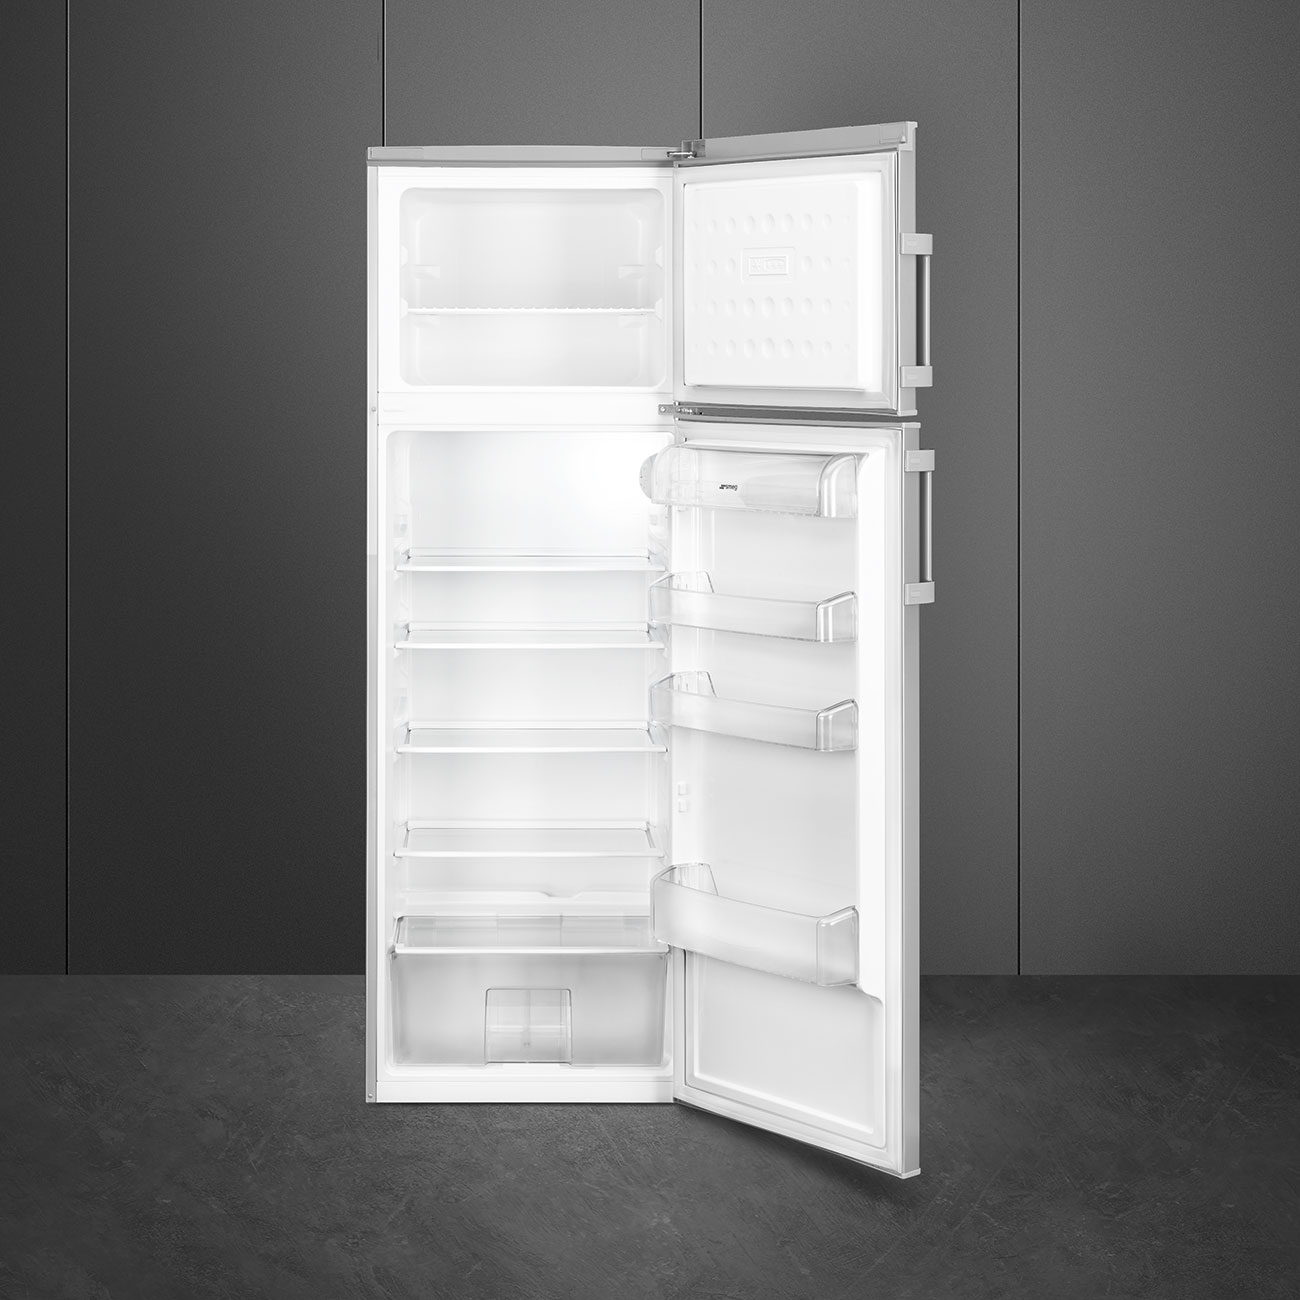 Top Mount Free standing refrigerator - Smeg_2